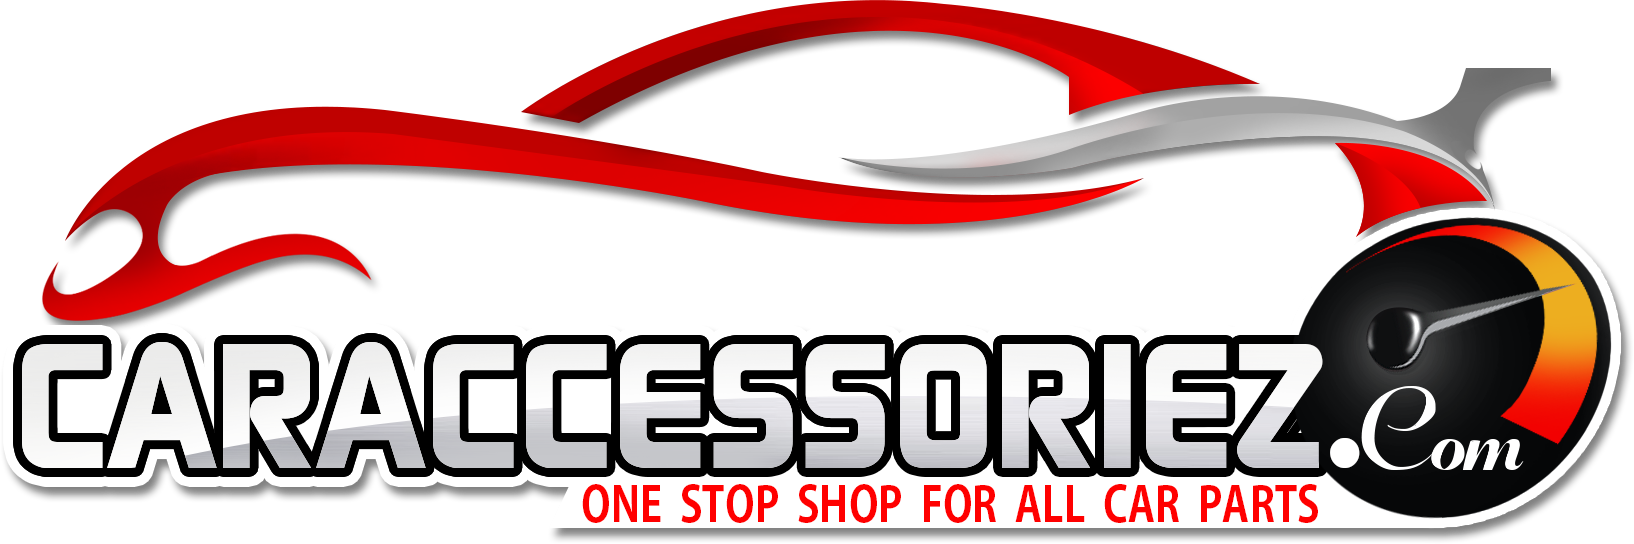 Car Accessories Pakistan - Car Accessories Store Logo (1634x544)